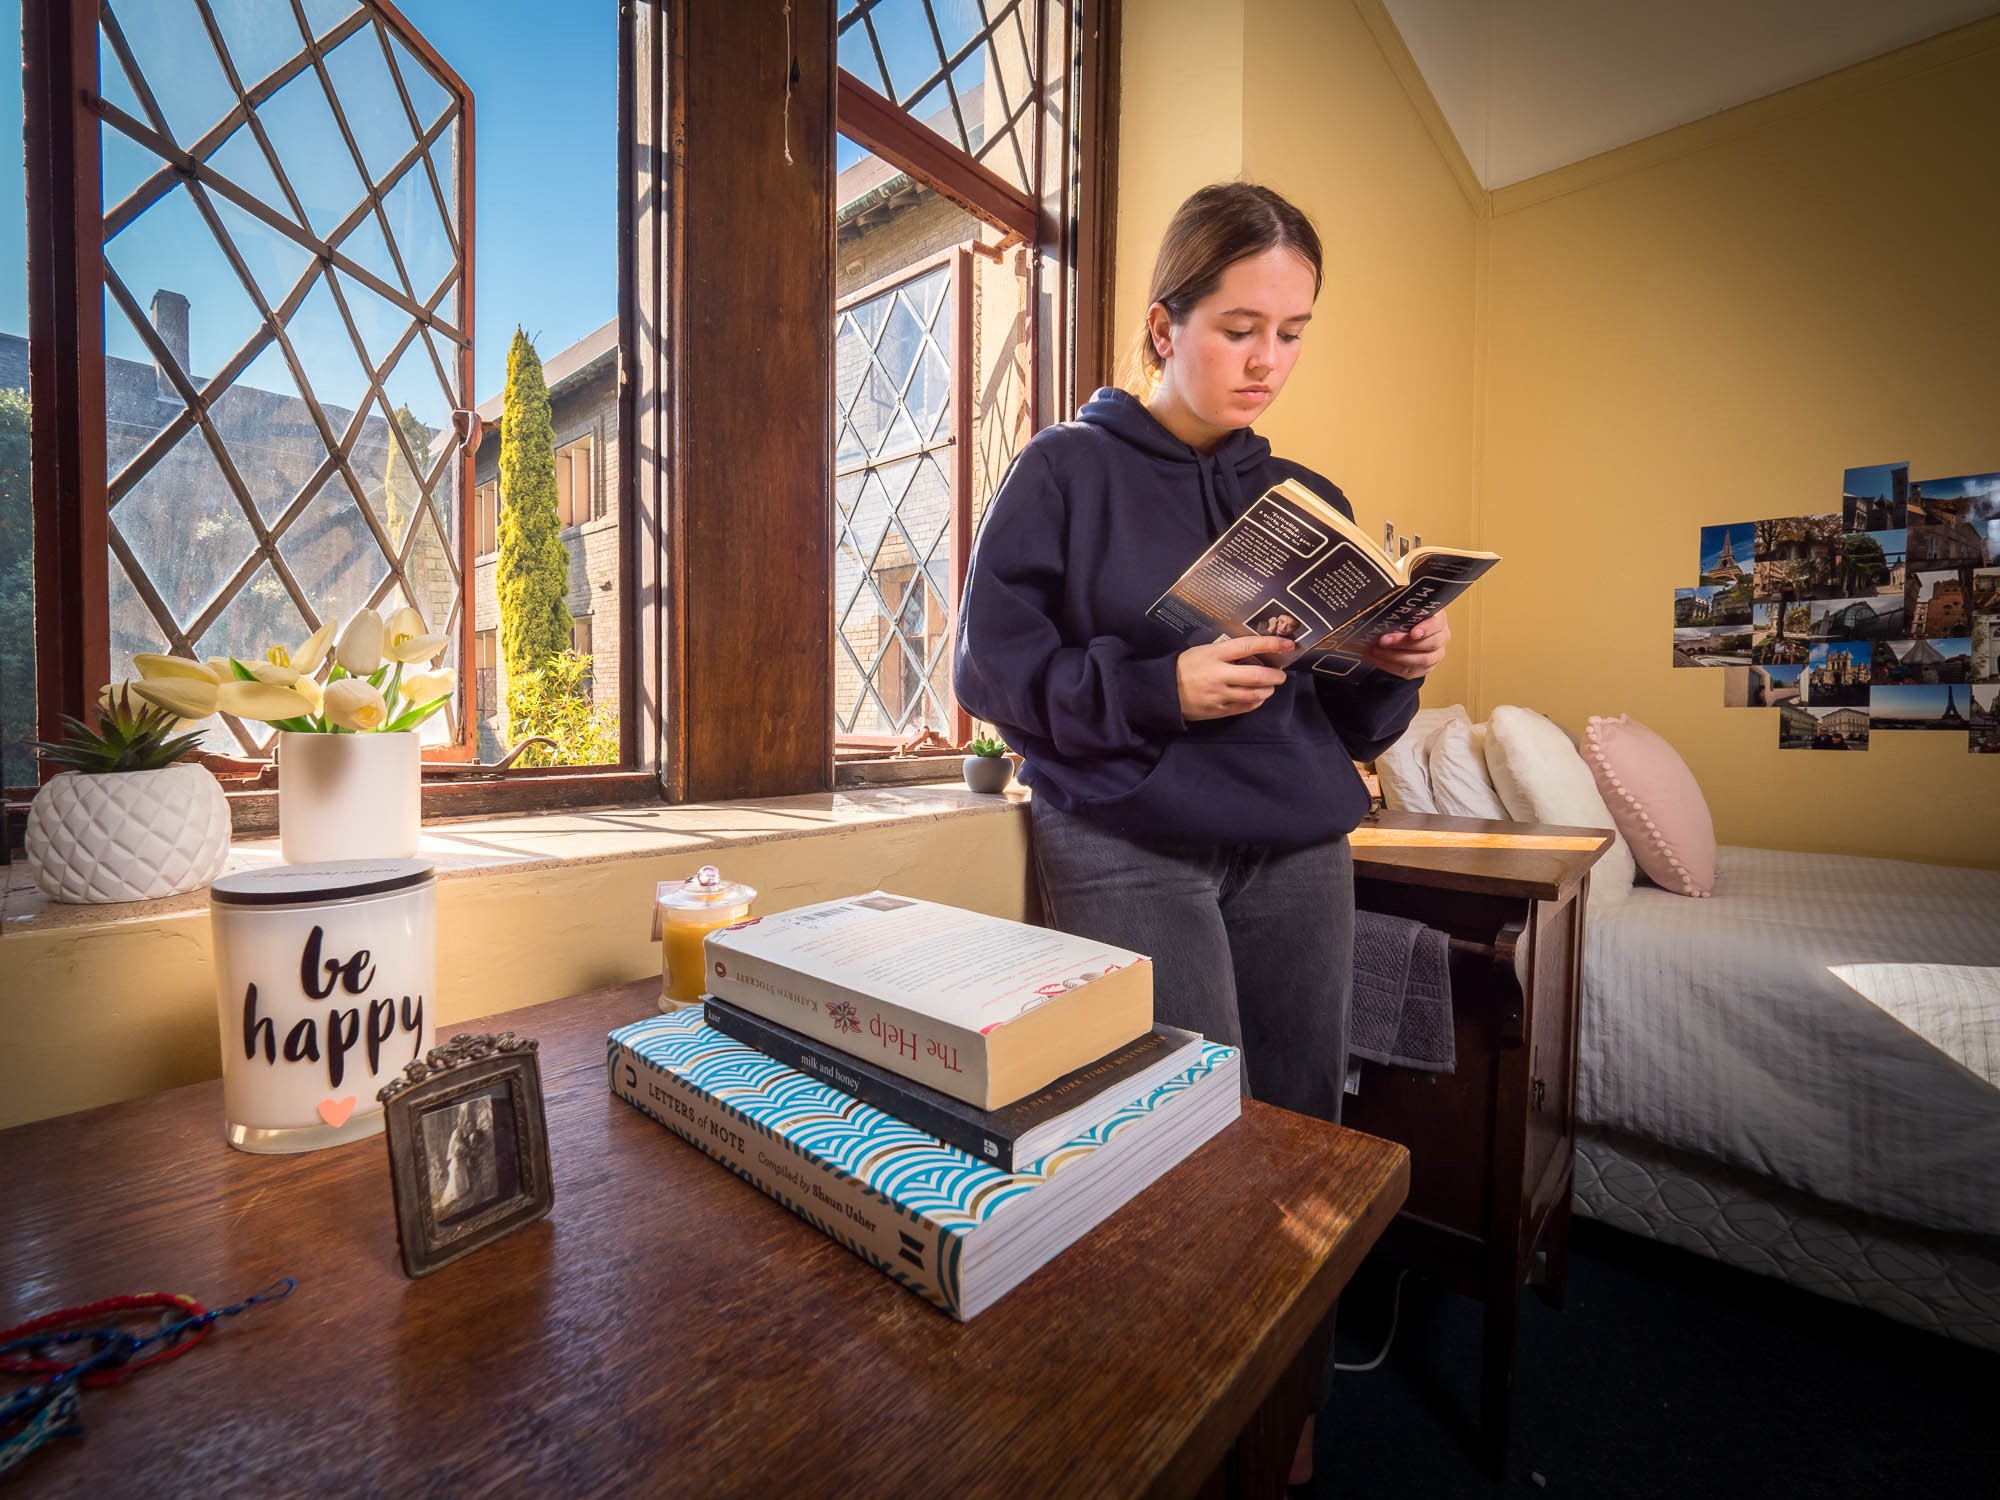 A Sancta Sophia College student reads near her room window.